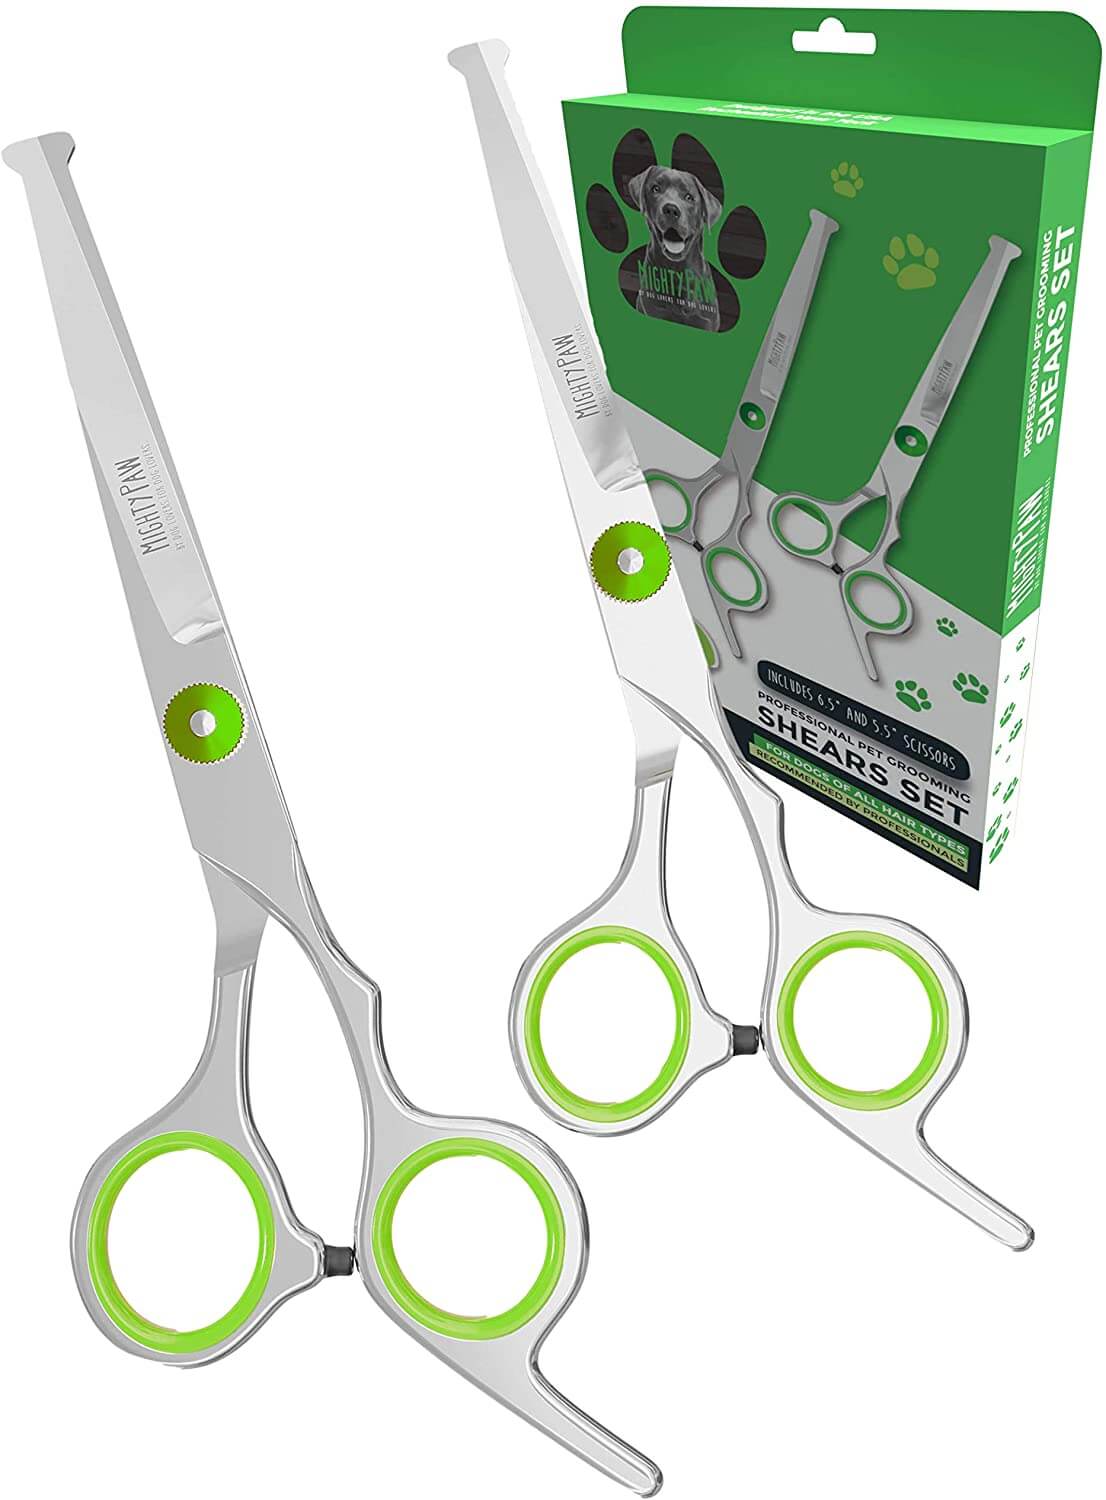 haircut scissors types